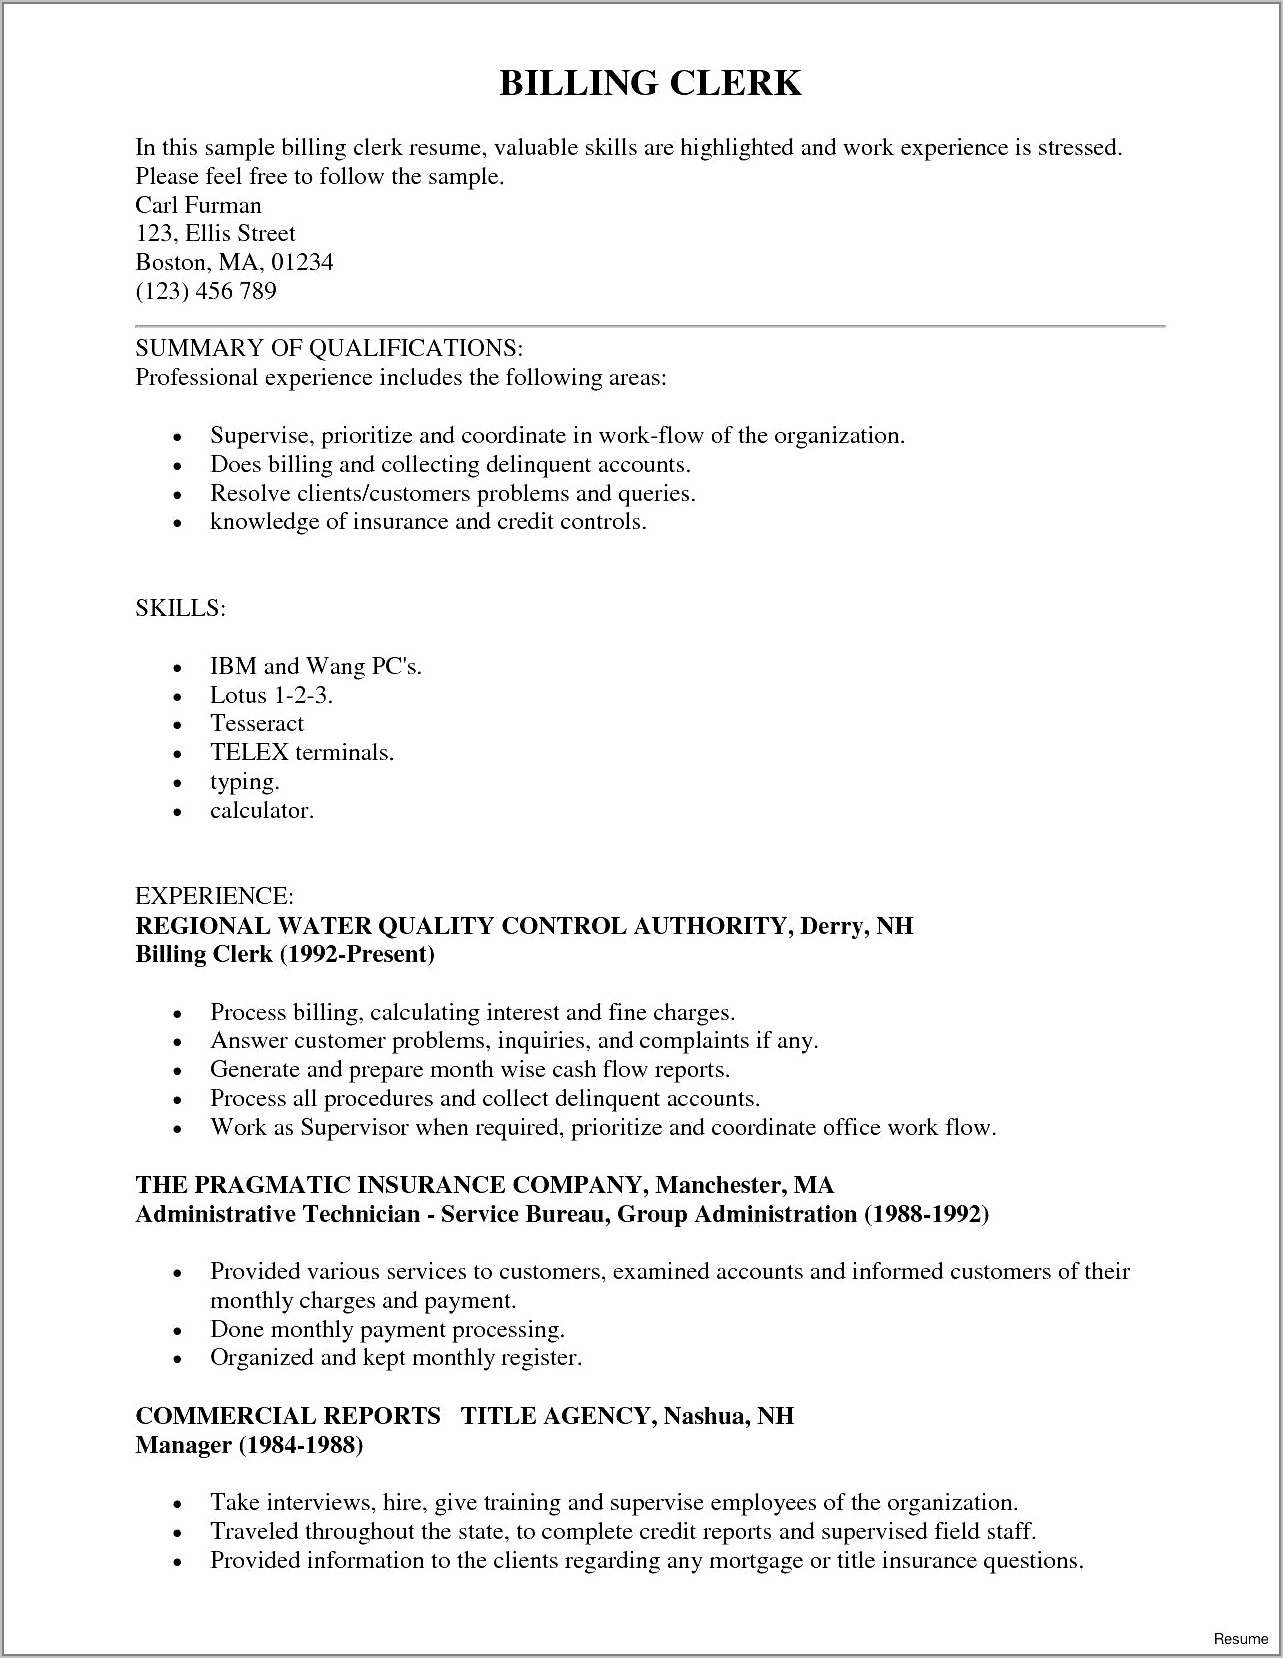 Resume Samples For Medical Coding